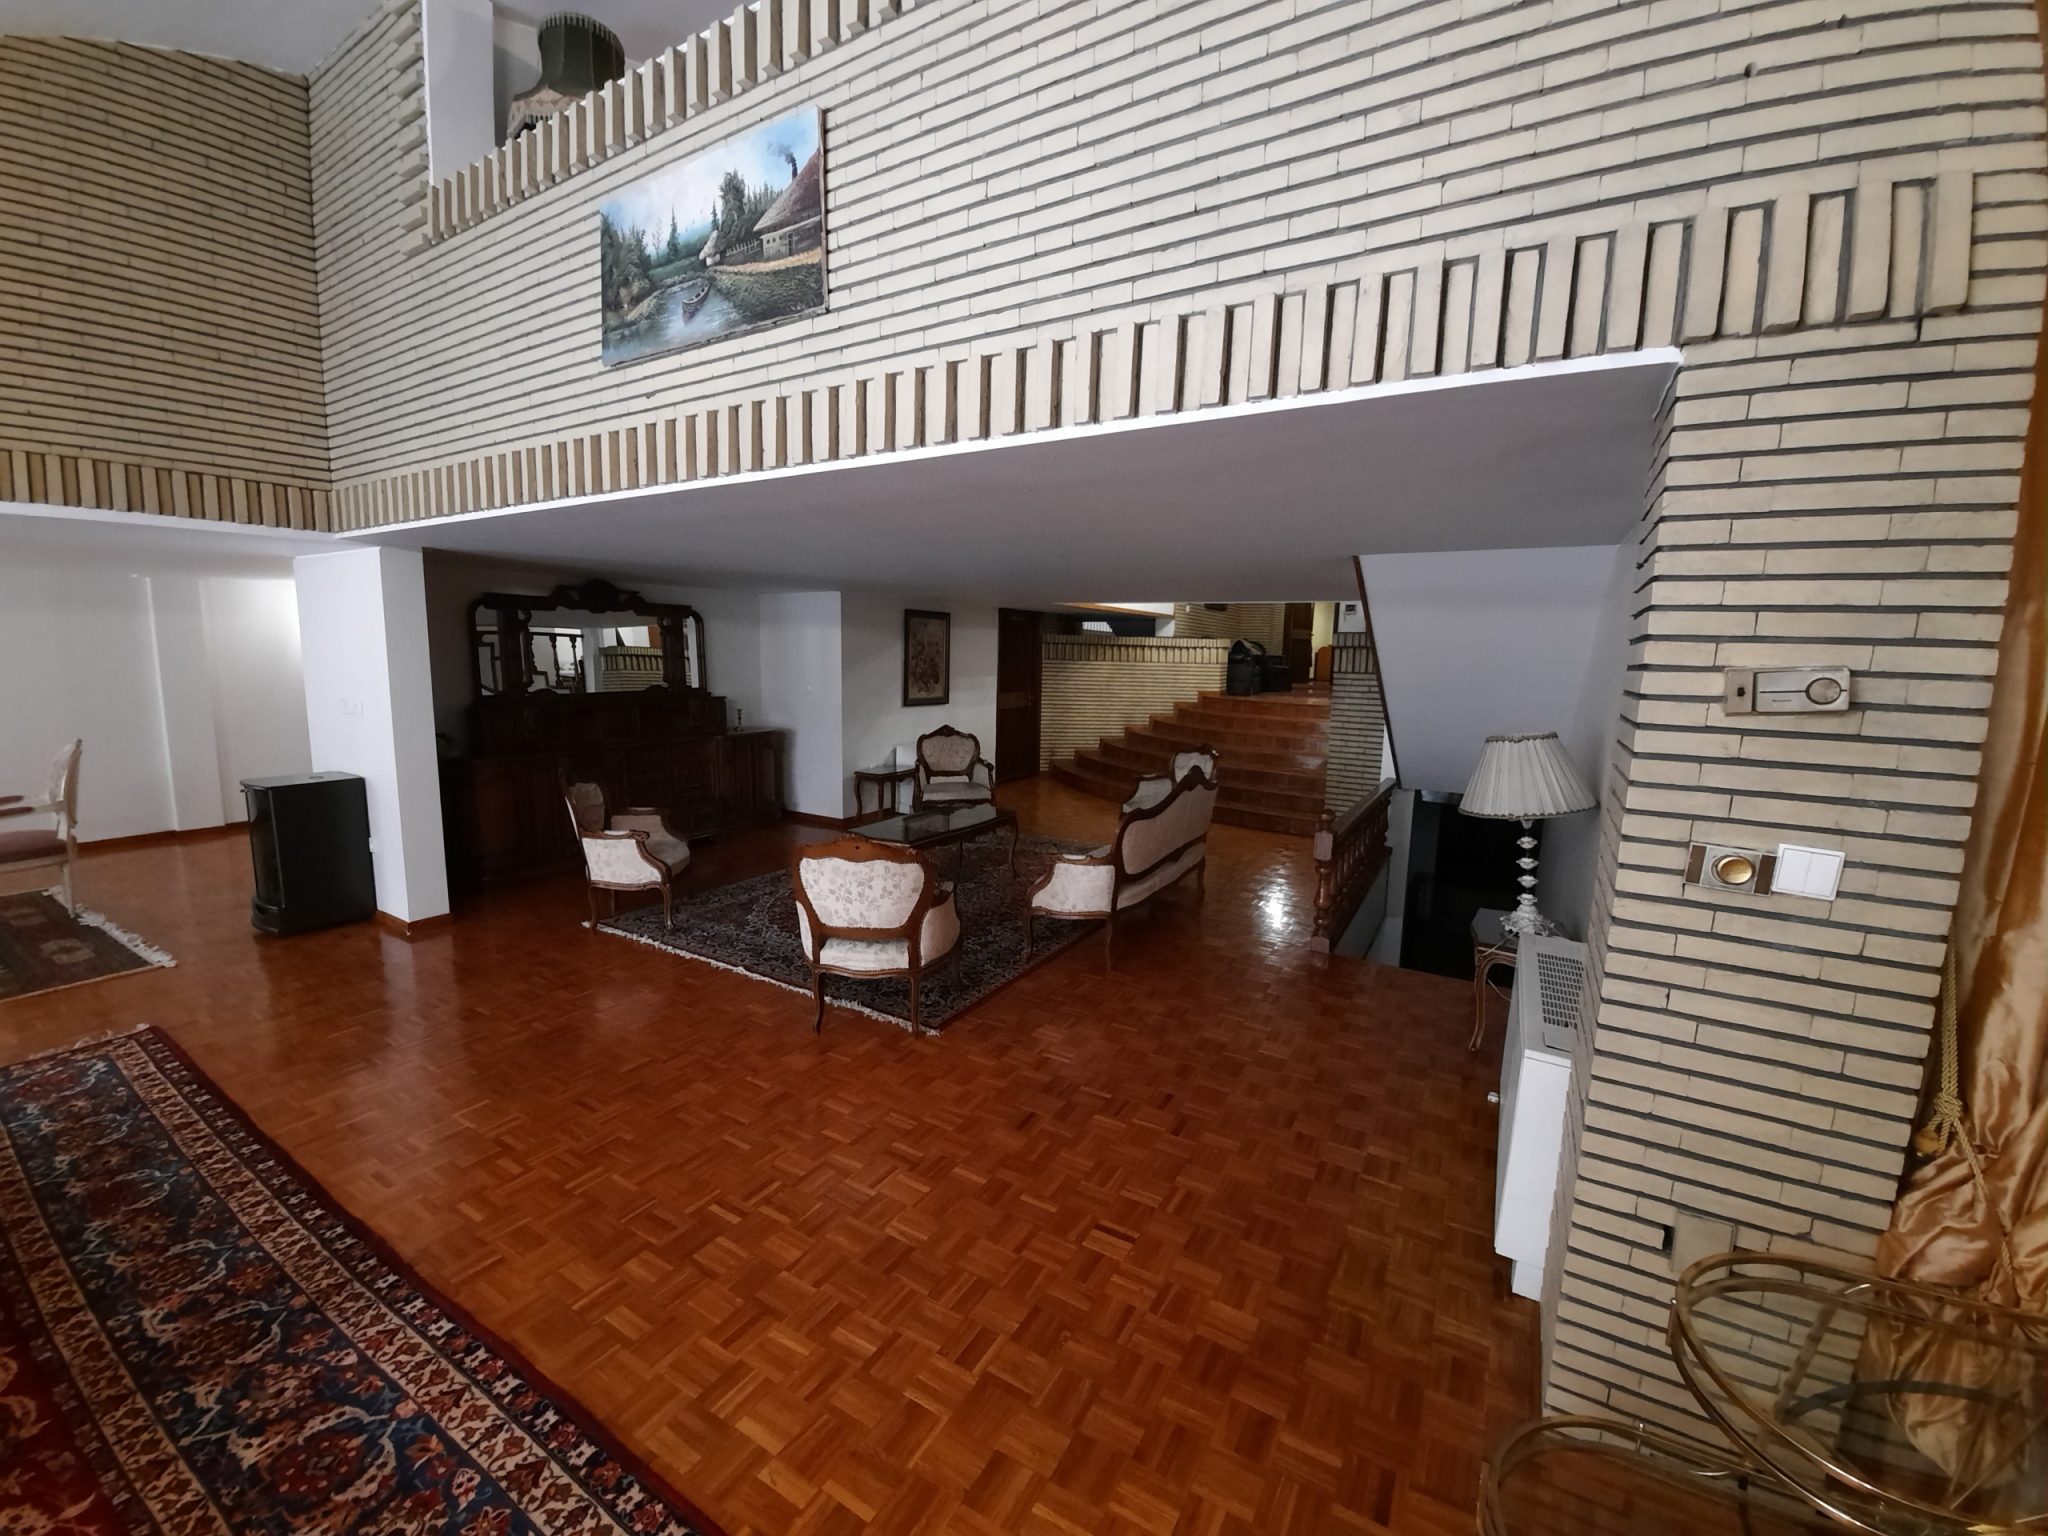 Triplex house for renting in Tehran Jordan